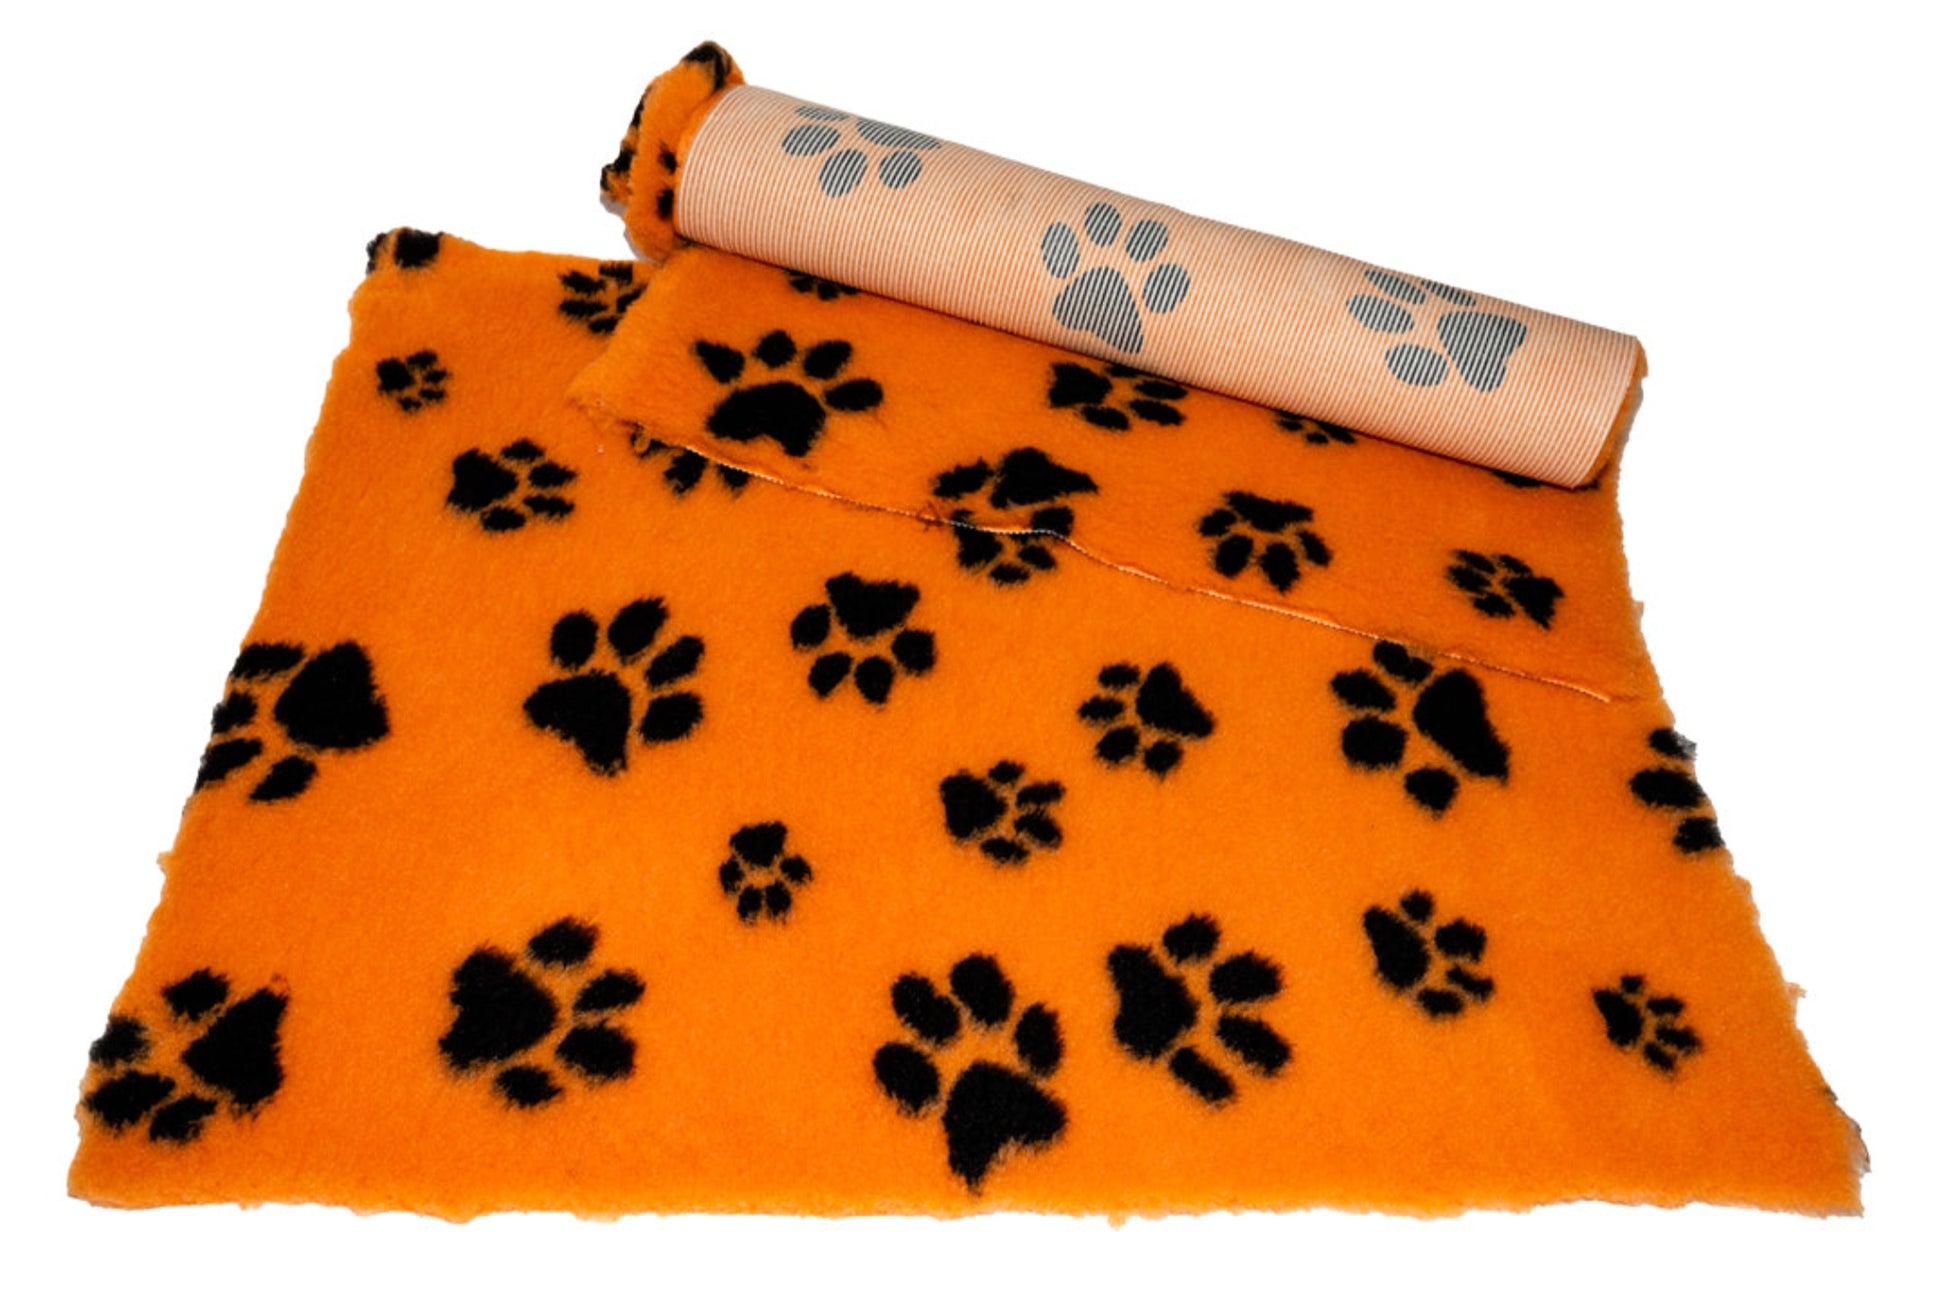 Vet Bed - Rubber Backed - Orange with Black Designer Paws